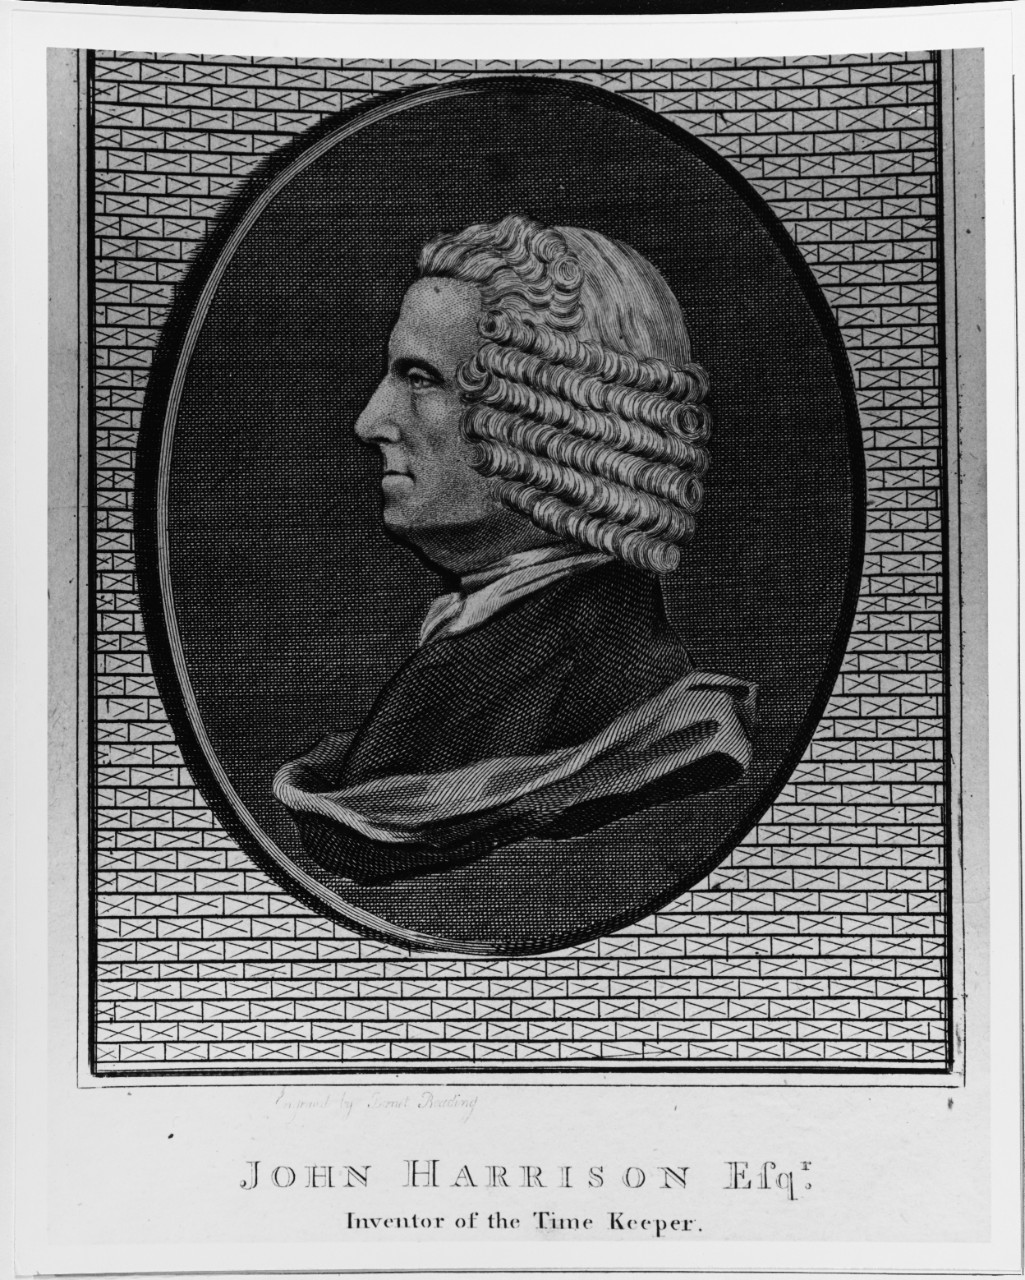 John Harrison (1693-1776), English instrument maker